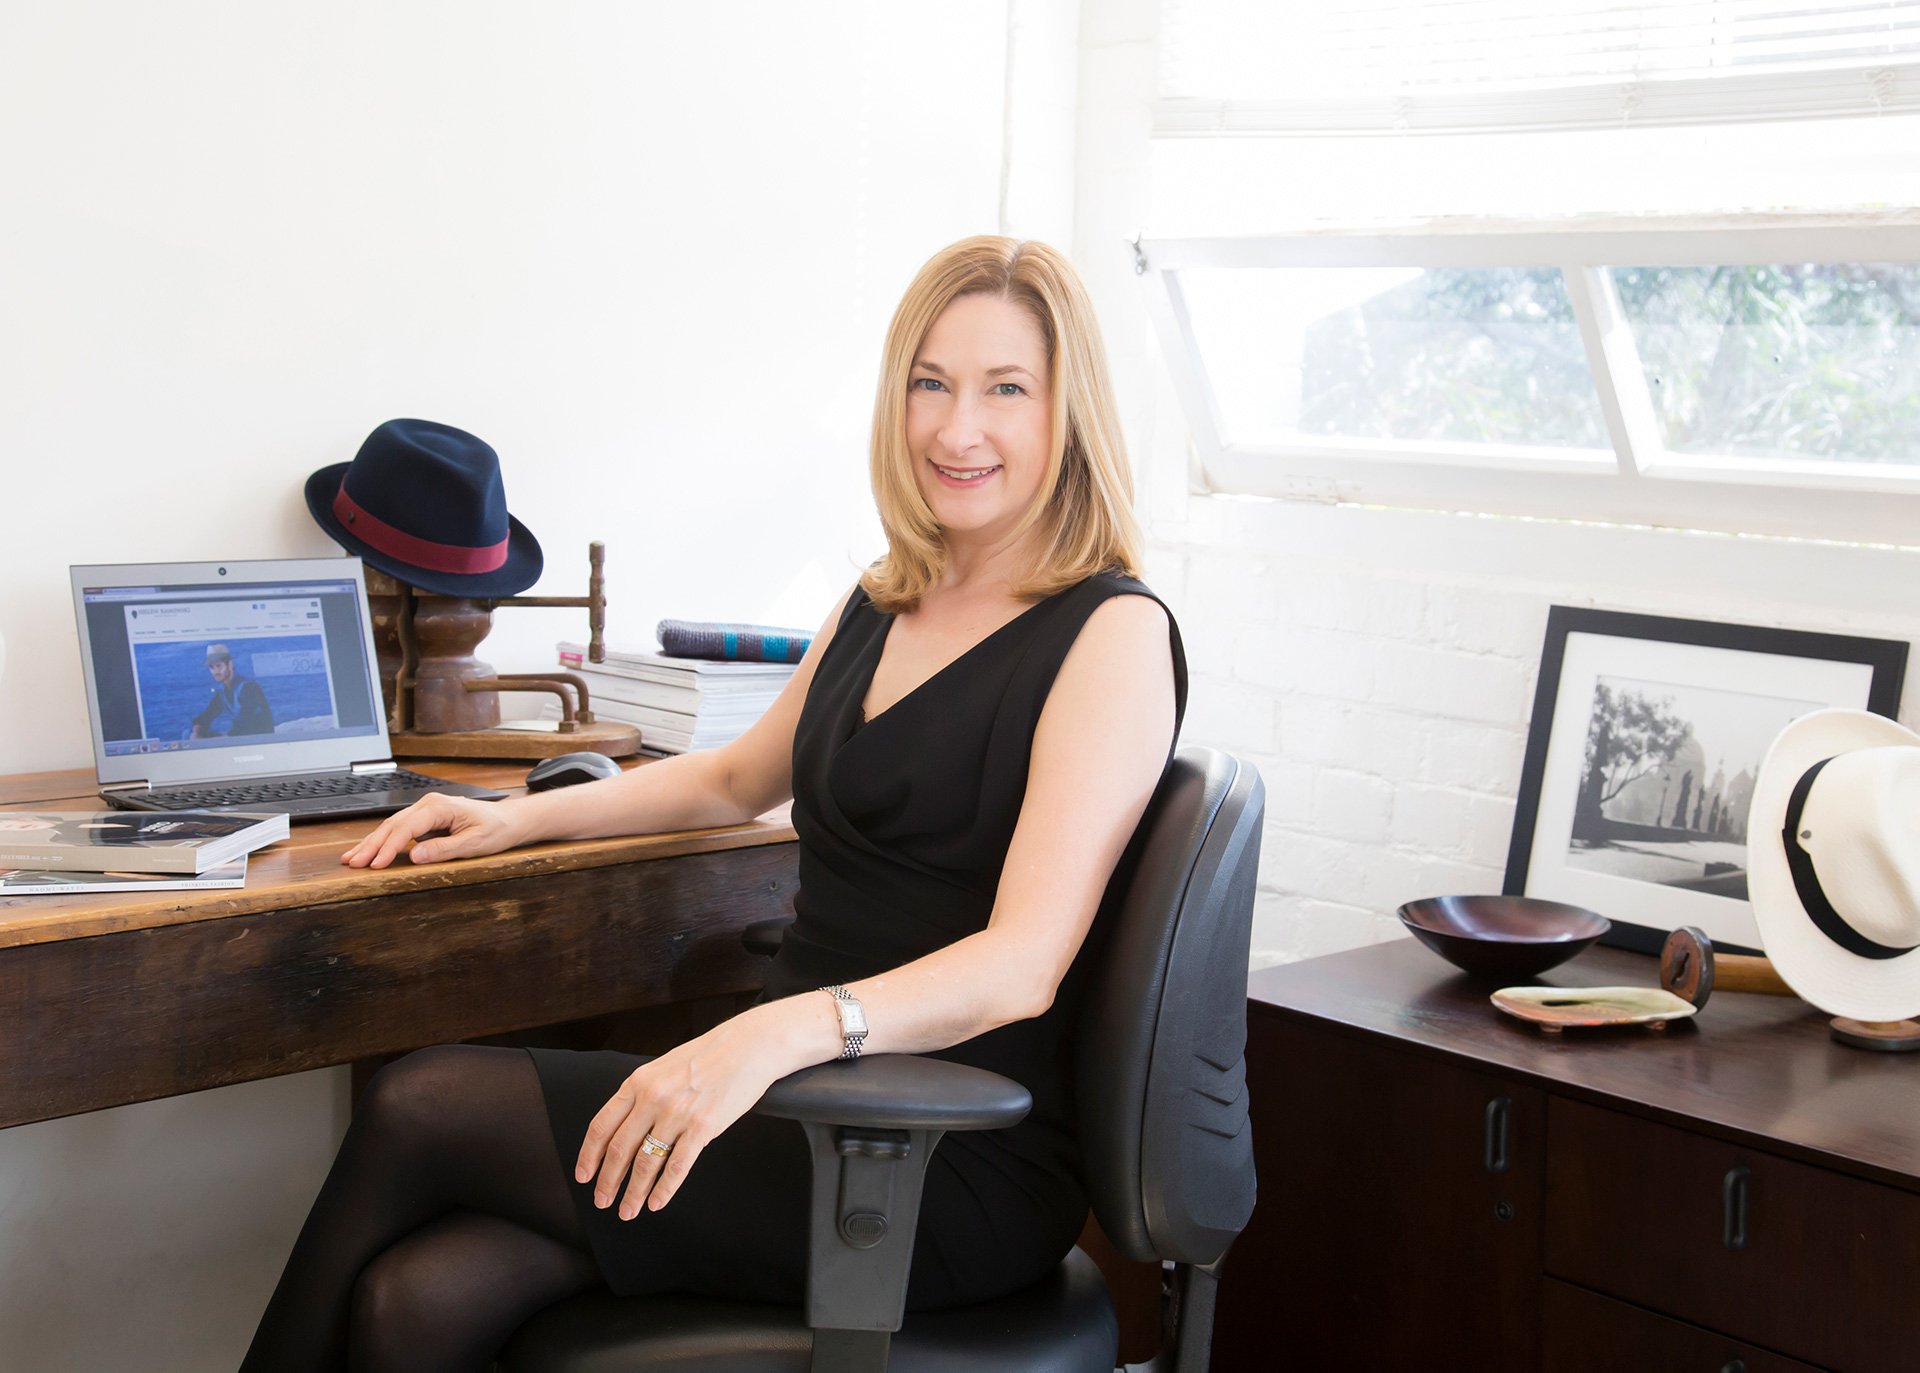  female executive portrait at desk brisbane kirsten cox photographer headshots 